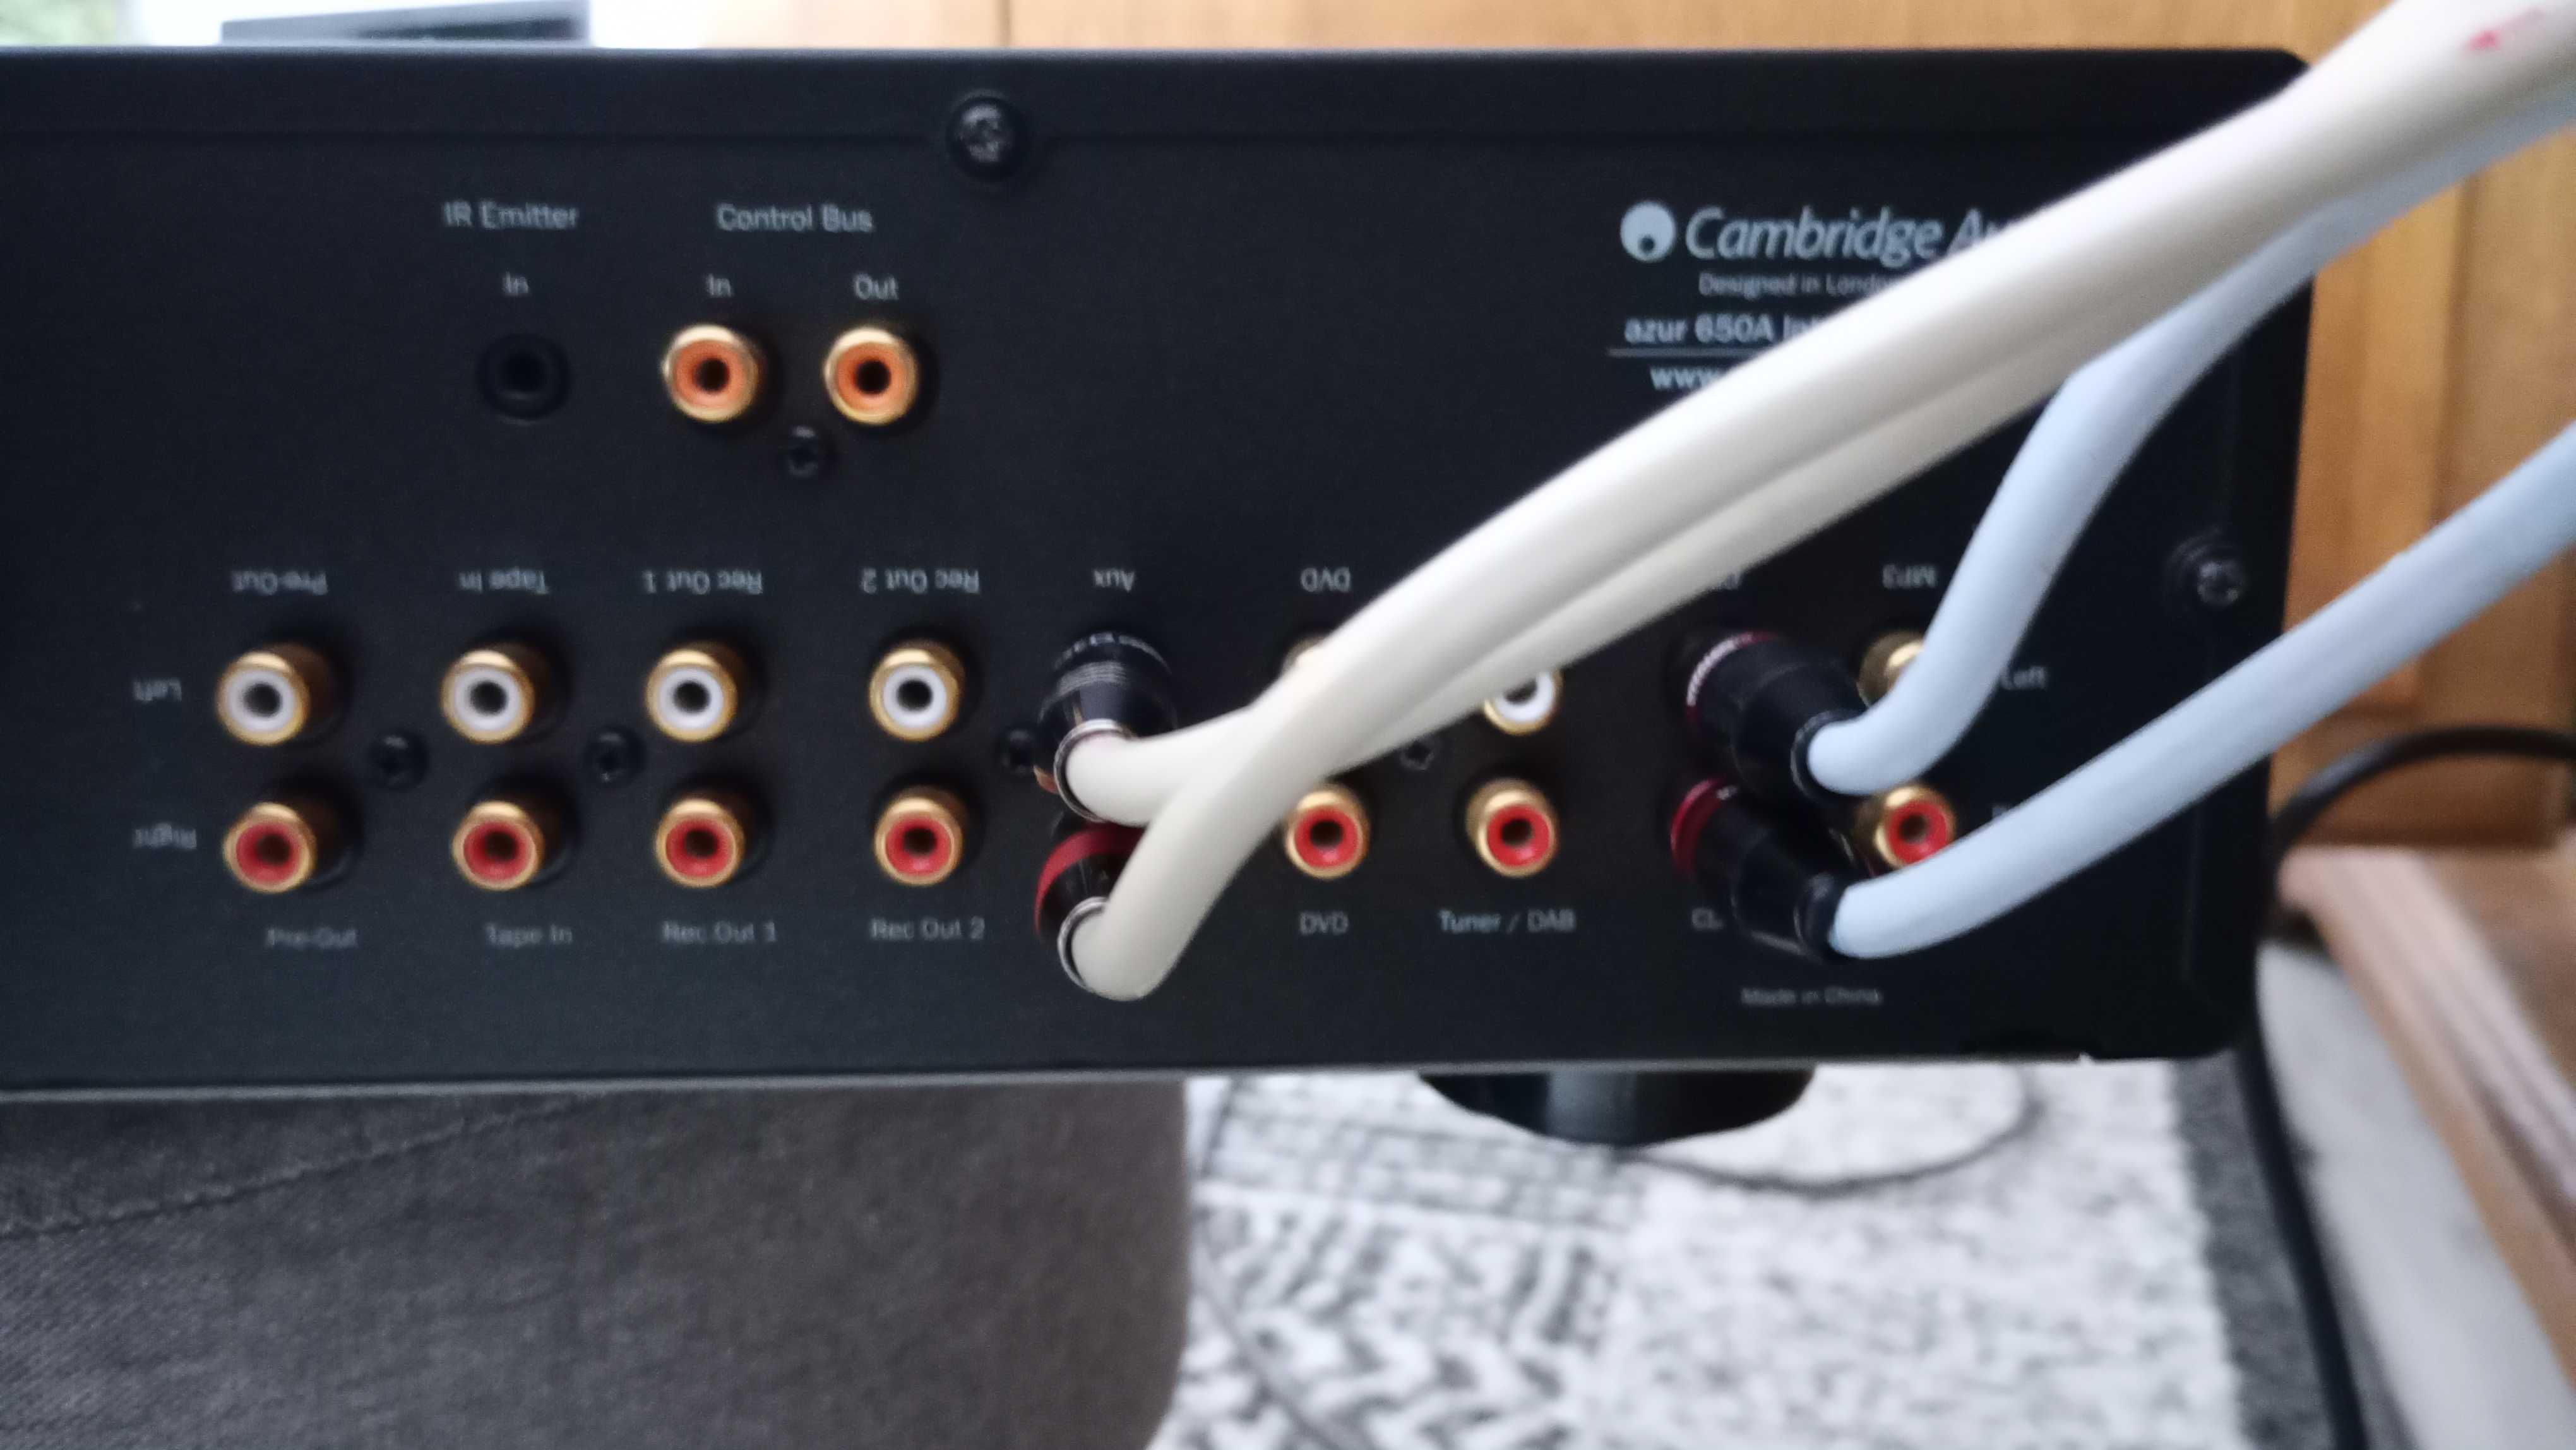 Cambridge audio azur 650a